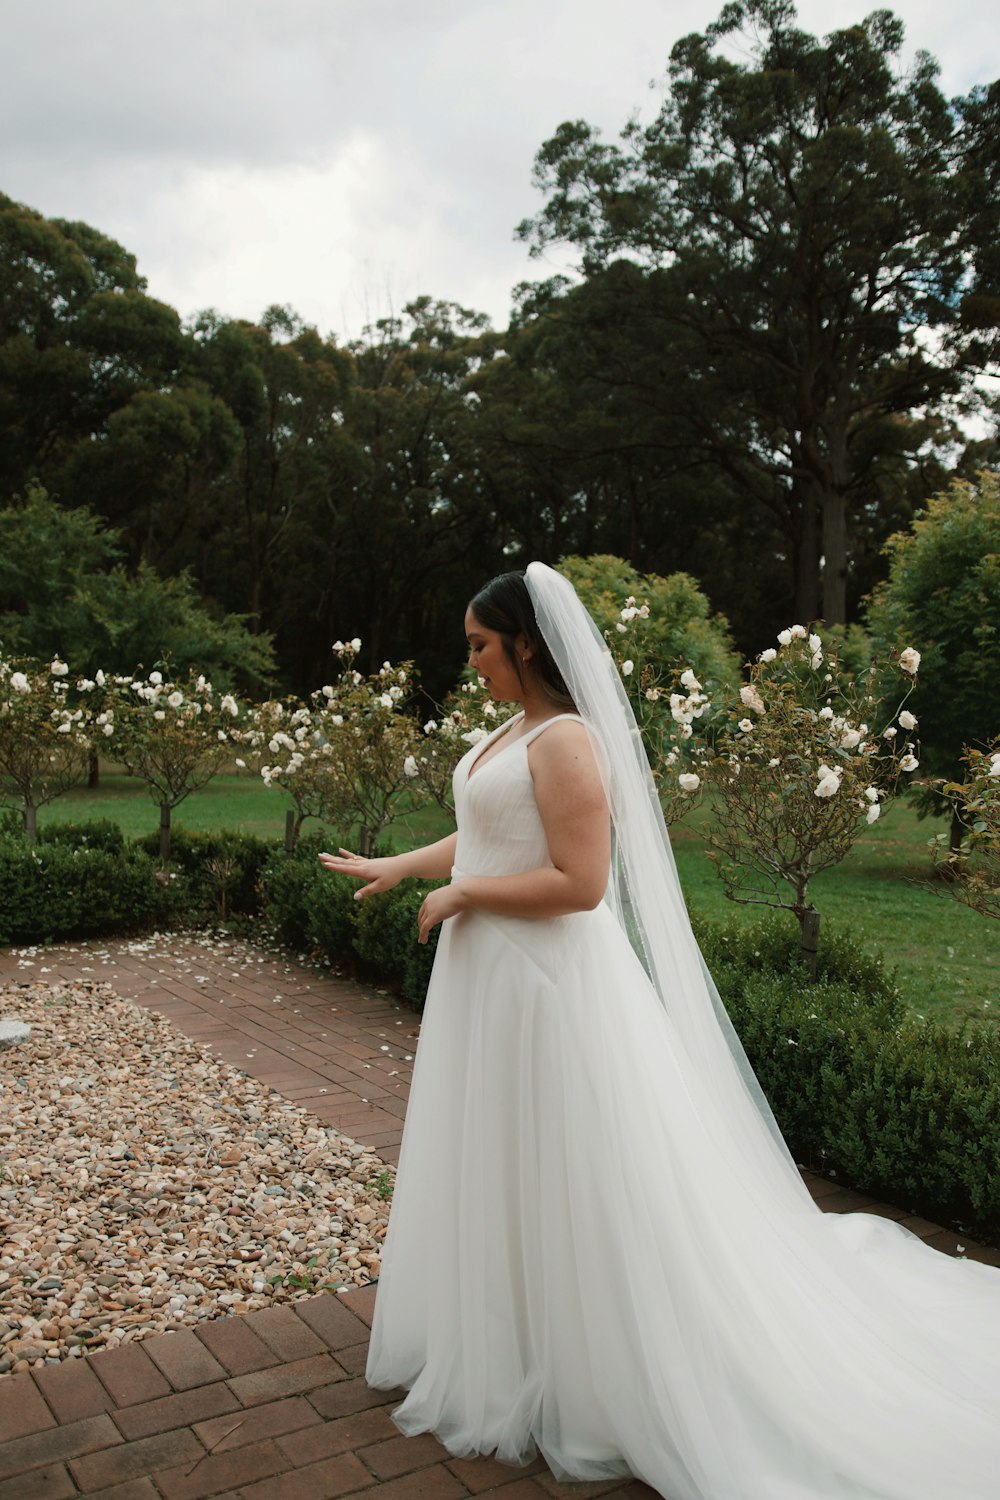 a woman in a wedding dress standing in a garden